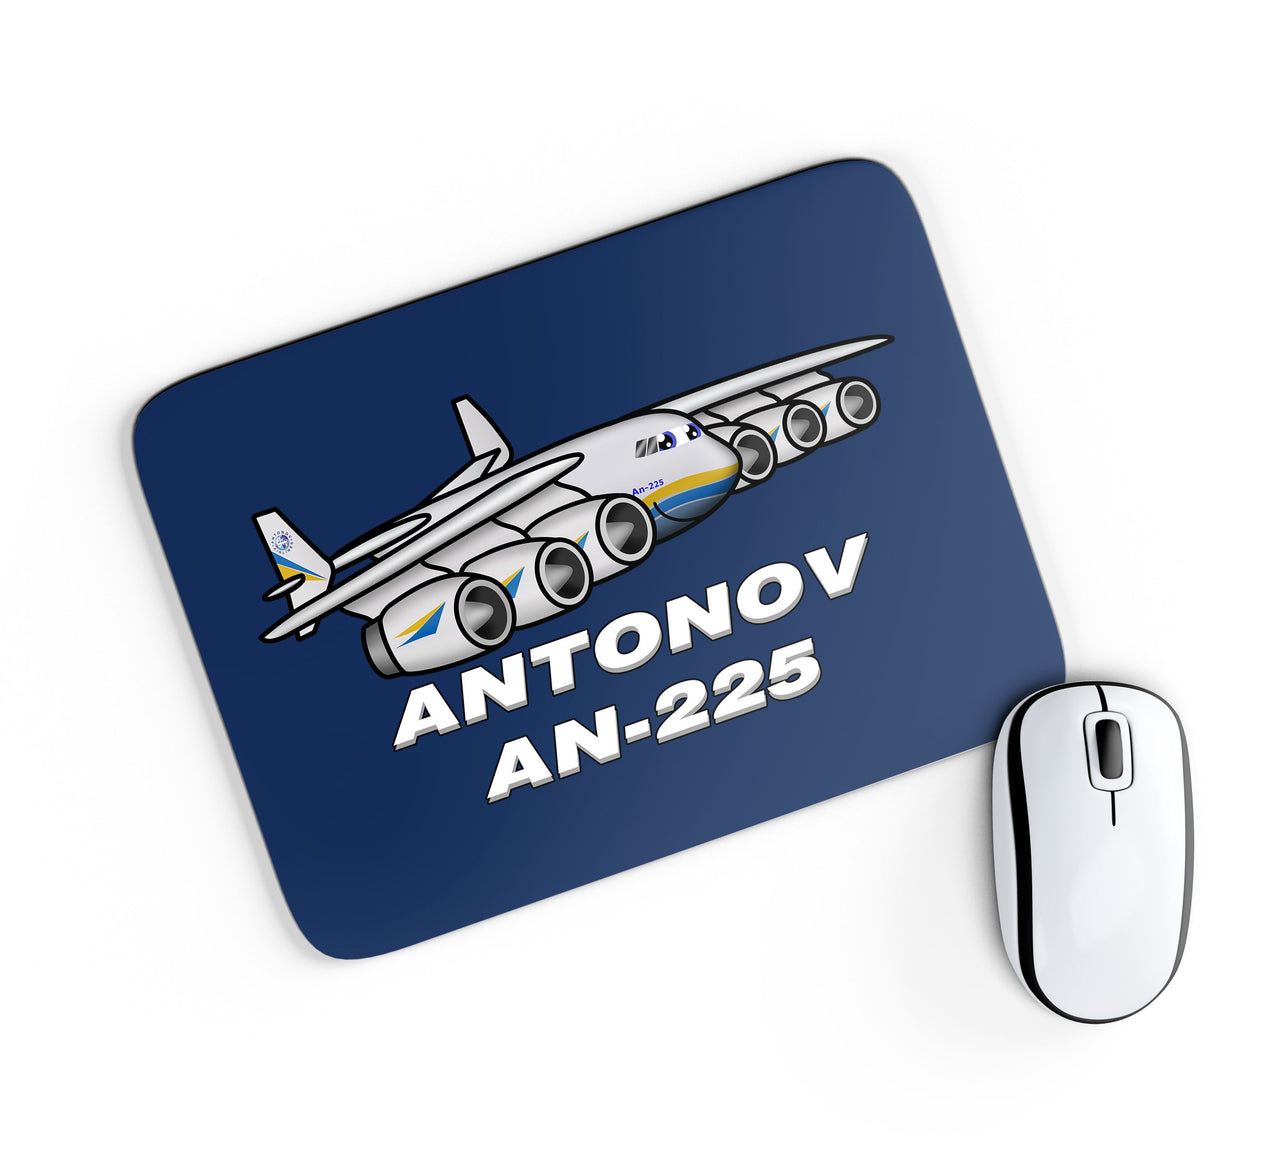 Antonov AN-225 (25) Designed Mouse Pads